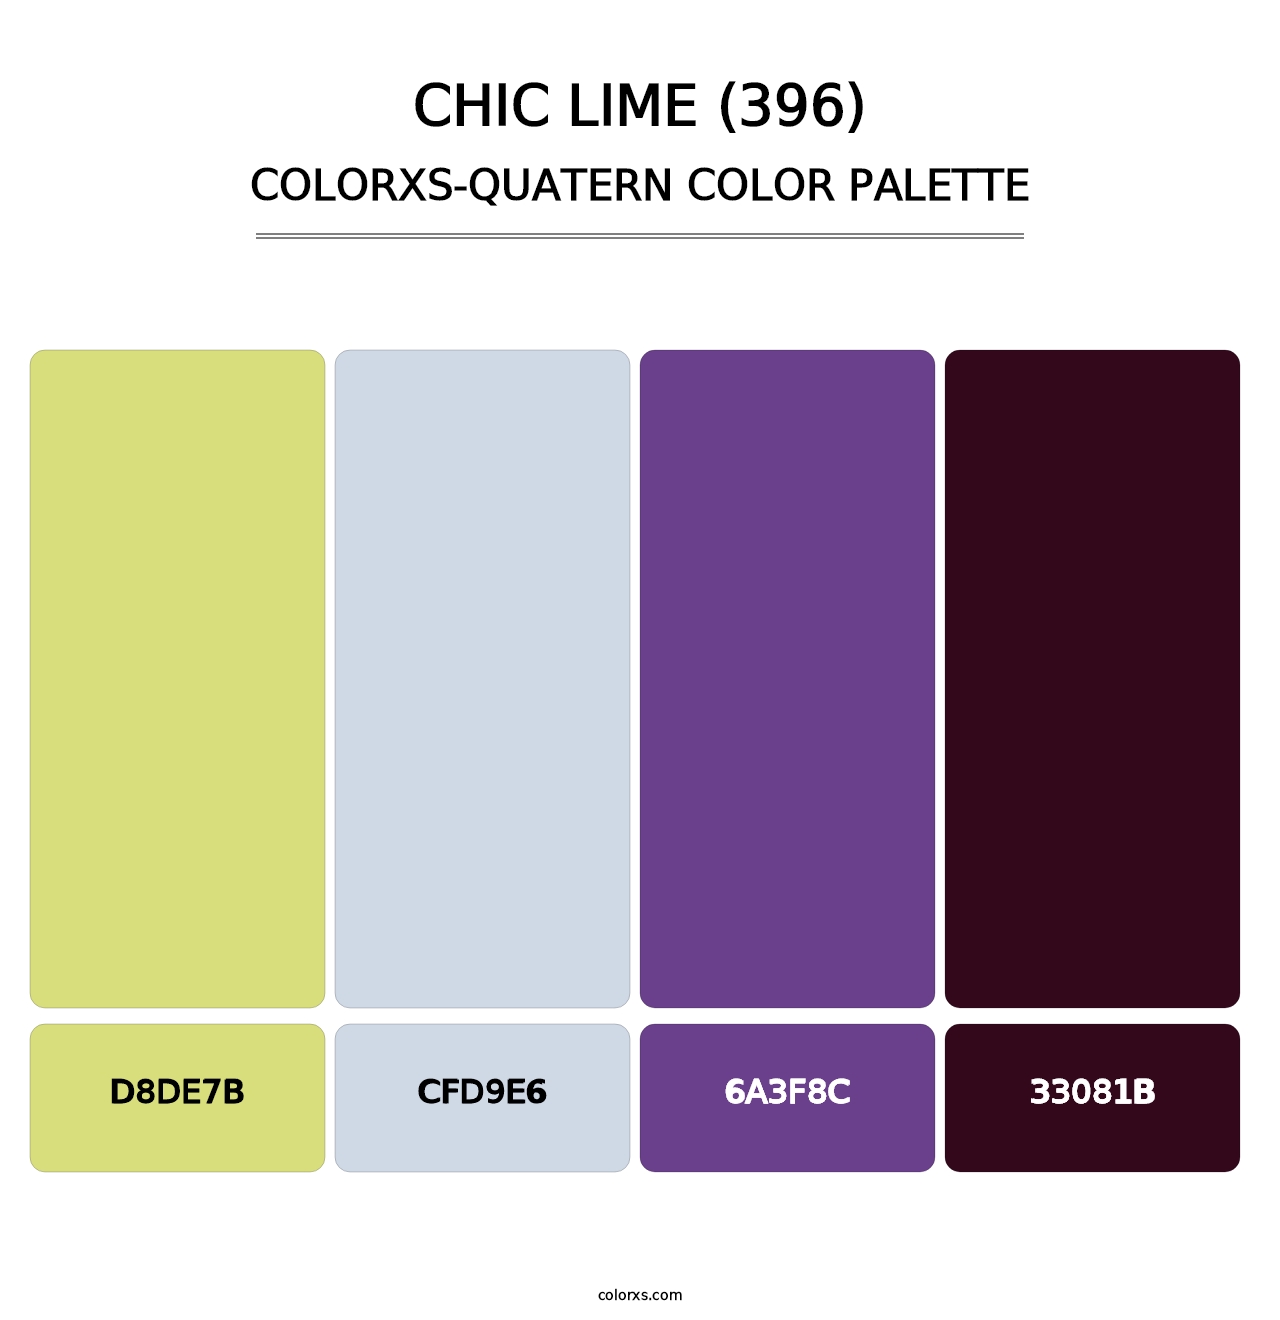 Chic Lime (396) - Colorxs Quatern Palette